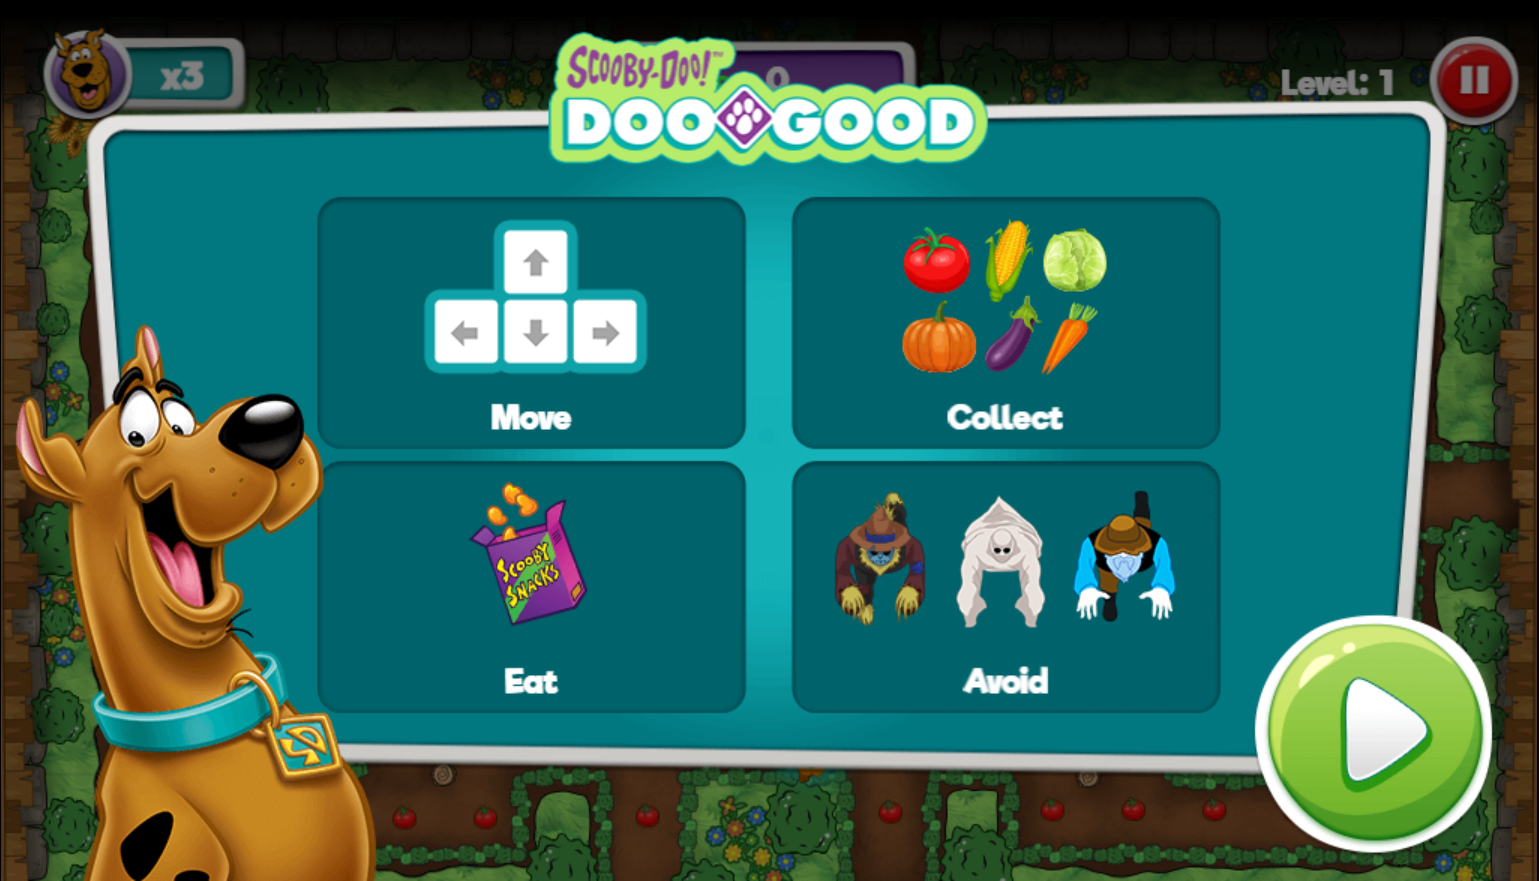 Scooby Doo Do Good Food Frenzy Game Instructions Screen Screenshot.